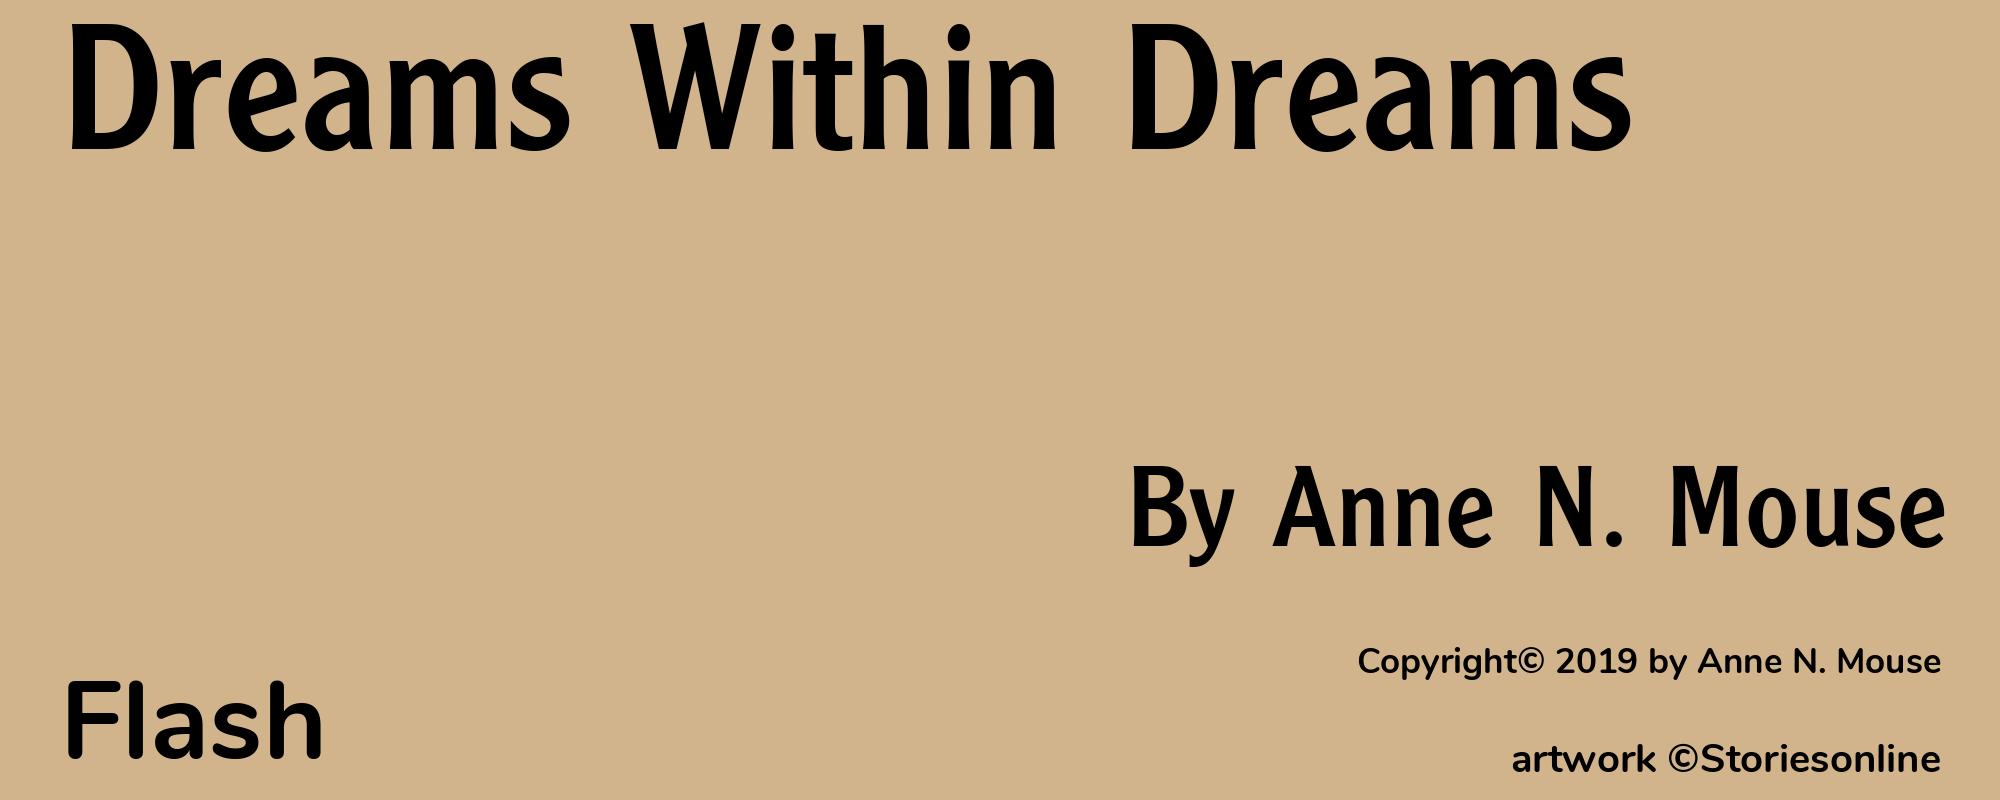 Dreams Within Dreams - Cover